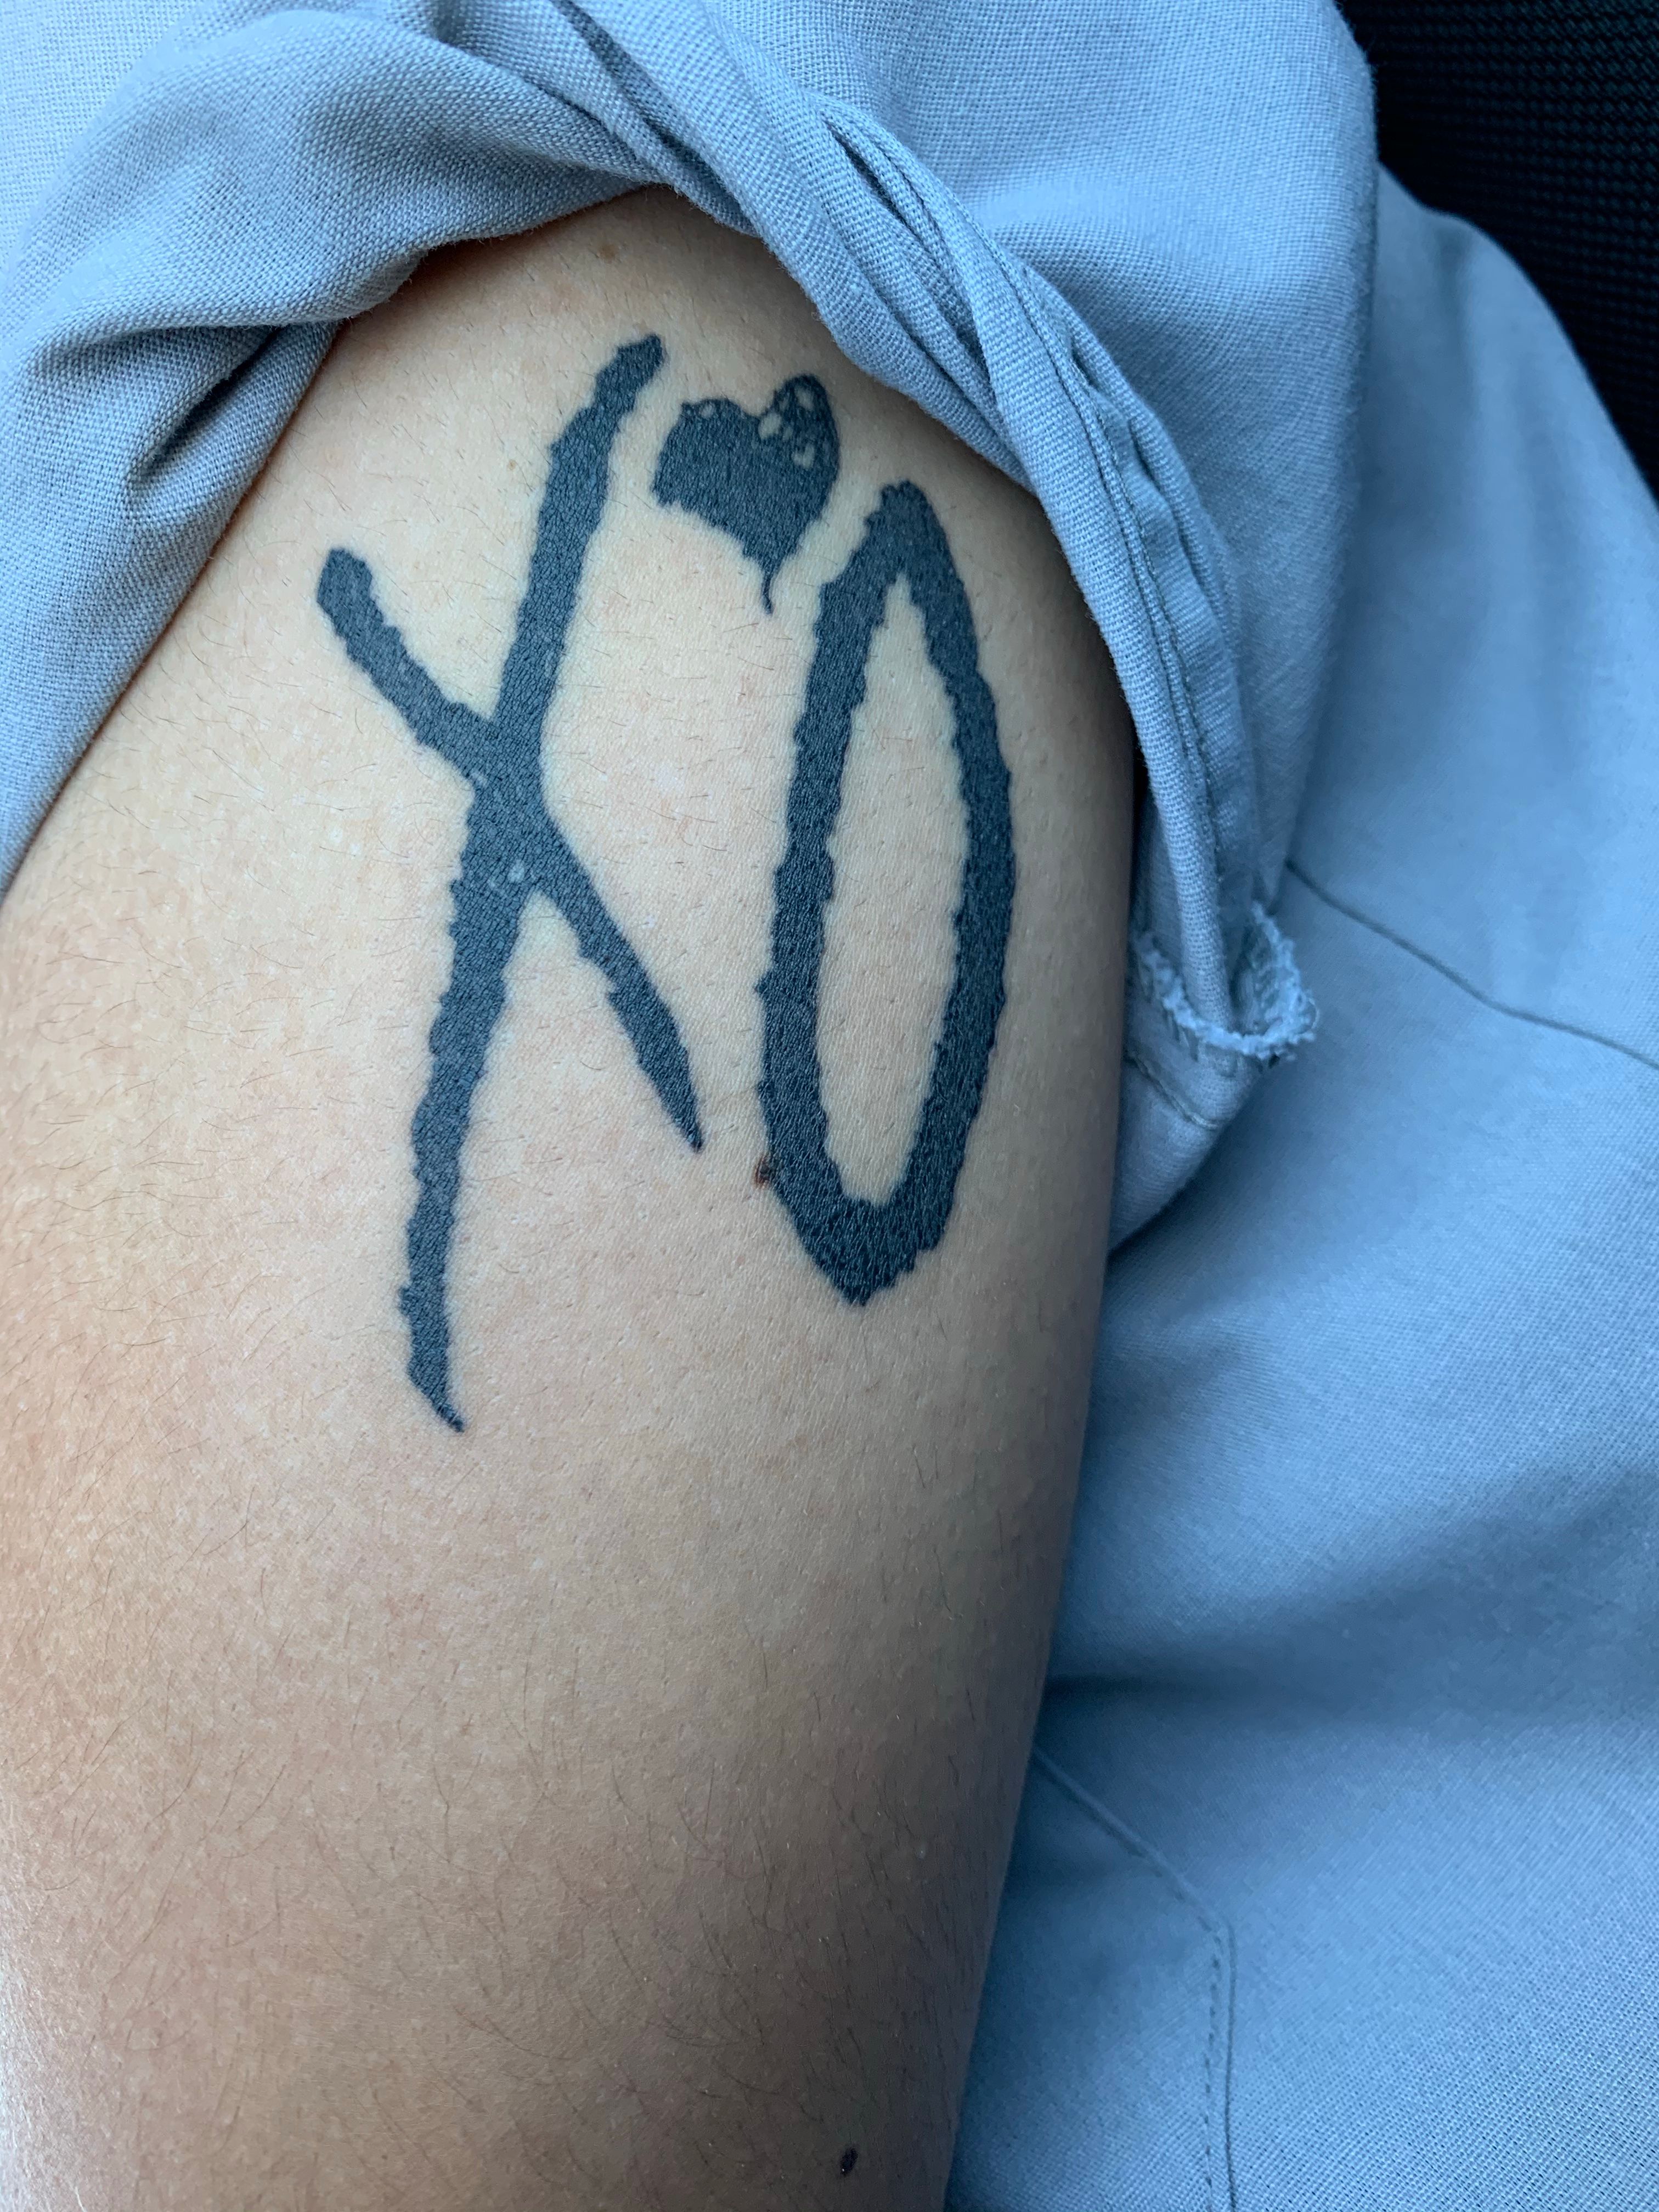 ☠☠☠ on Tumblr: Image tagged with xo the weeknd, weeknd xo, tattoo